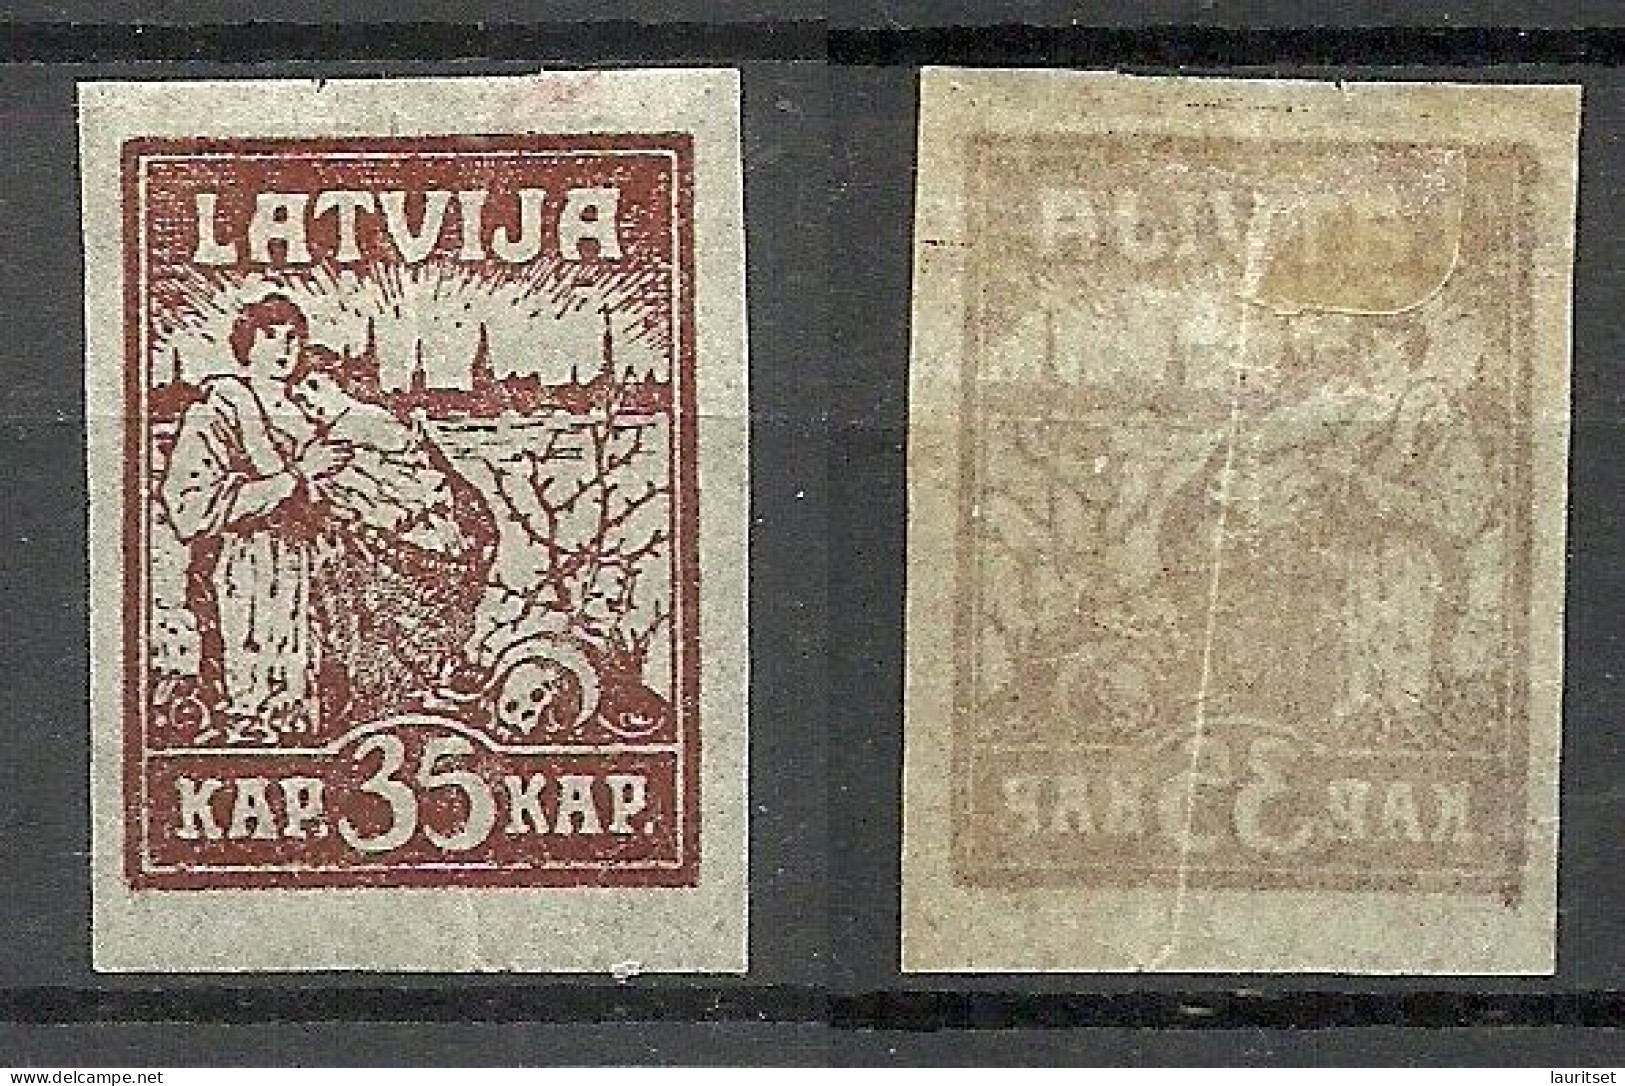 LETTLAND Latvia 1919 Michel 27 Y Zigarettenpapier Pelure Paper * NB! Light Vertical Fold Mark! - Latvia